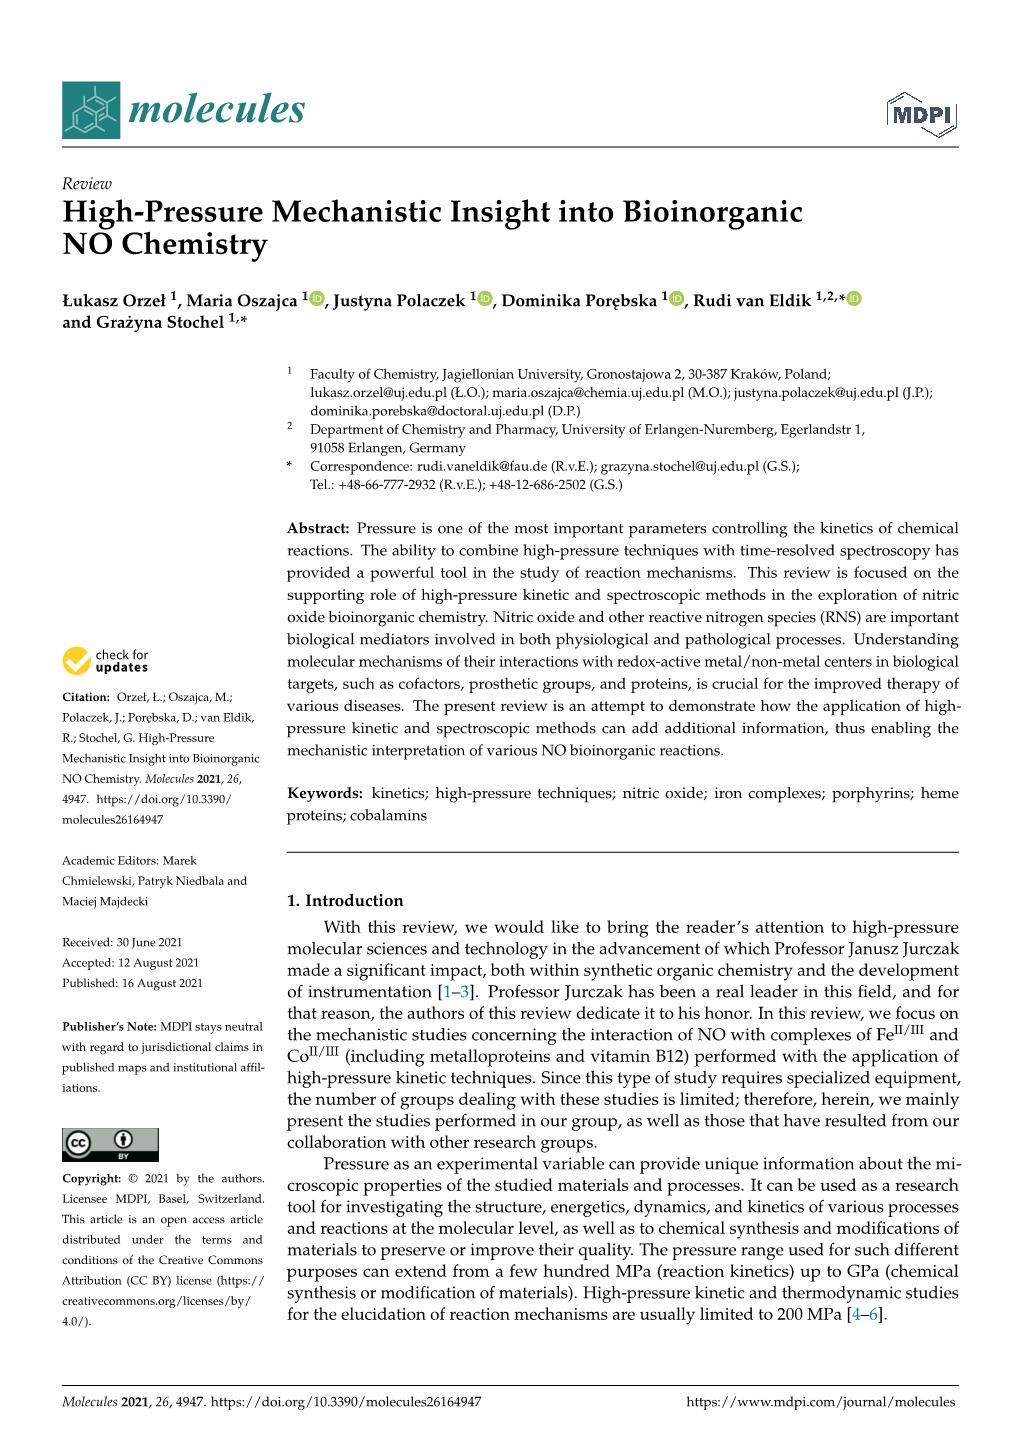 High-Pressure Mechanistic Insight Into Bioinorganic NO Chemistry